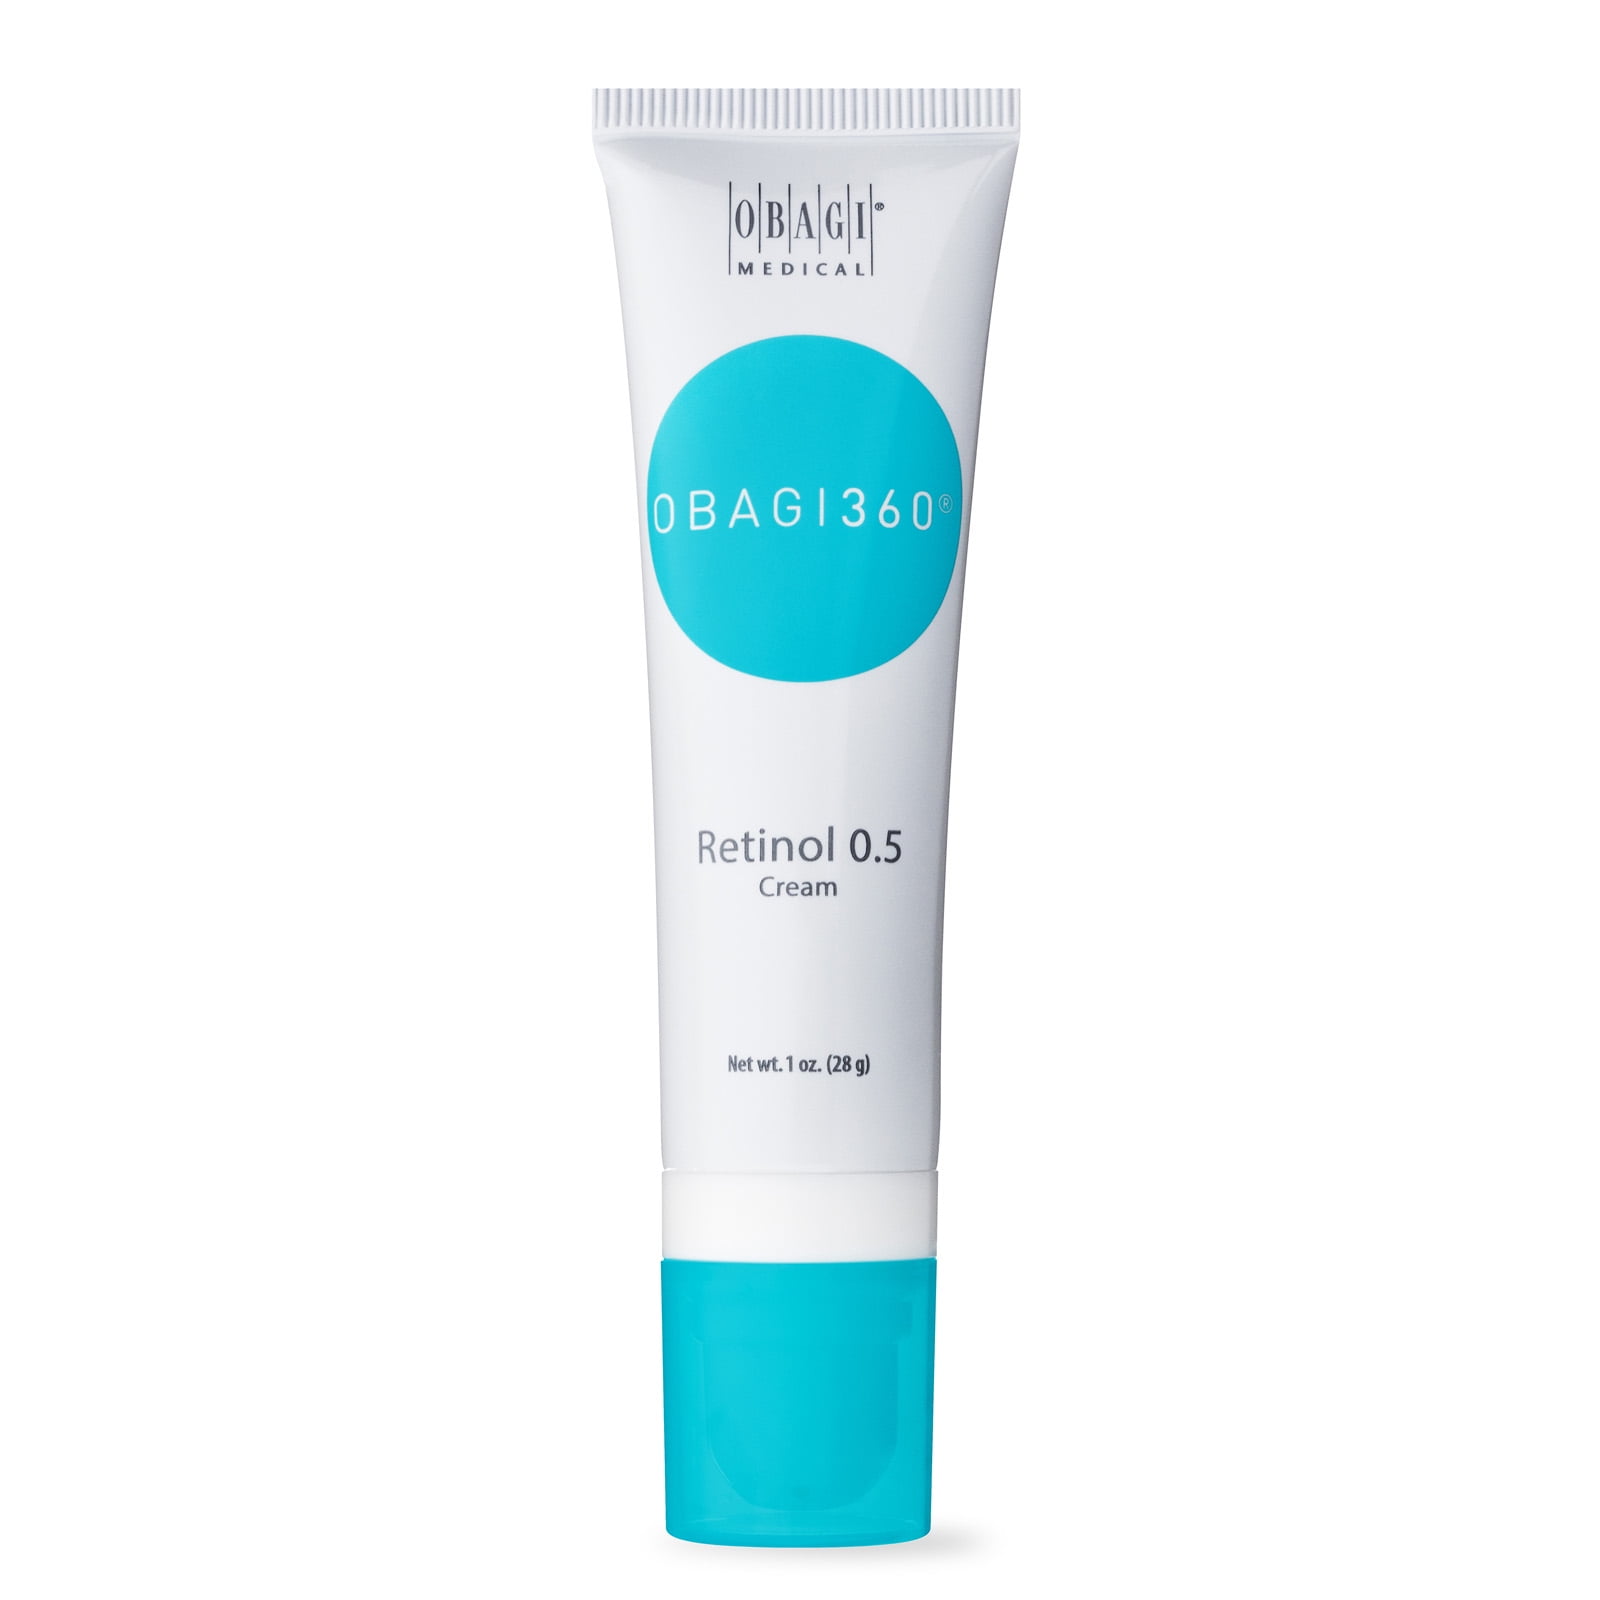 Obagi360 Retinol Facial Cream 0.5, 1 oz